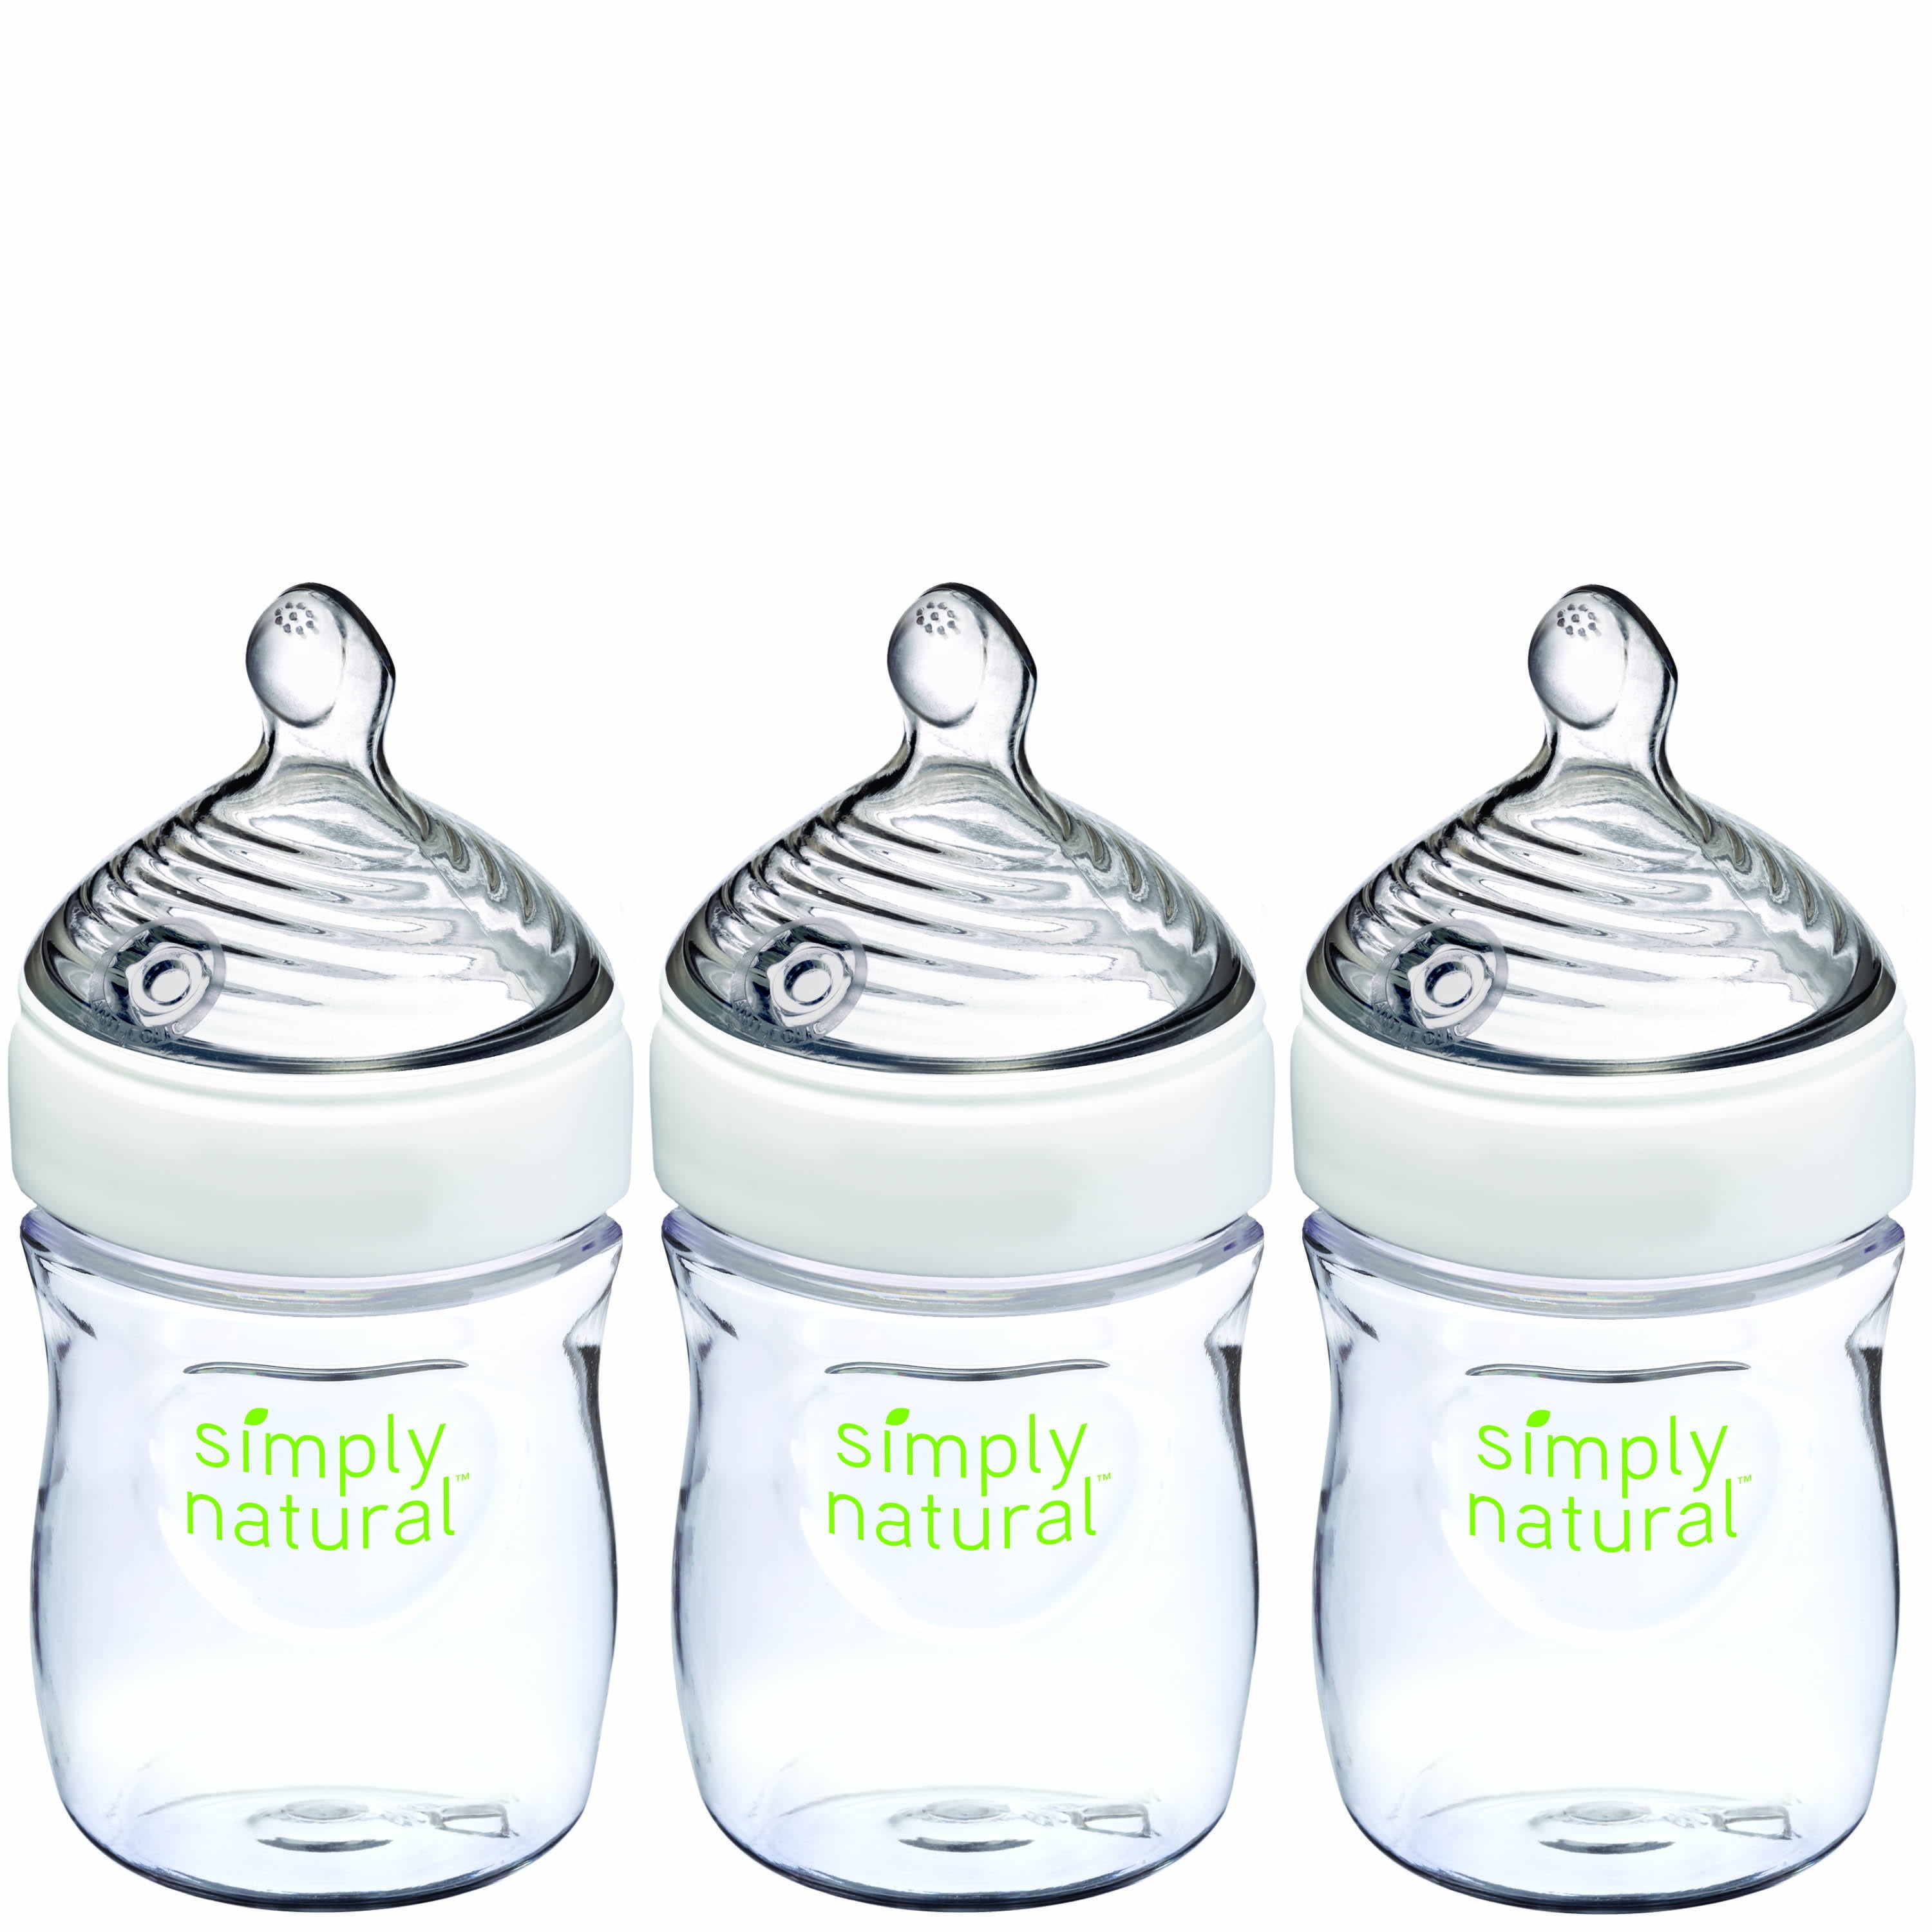 NUK Simply Natural Bottle - Walmart.com 